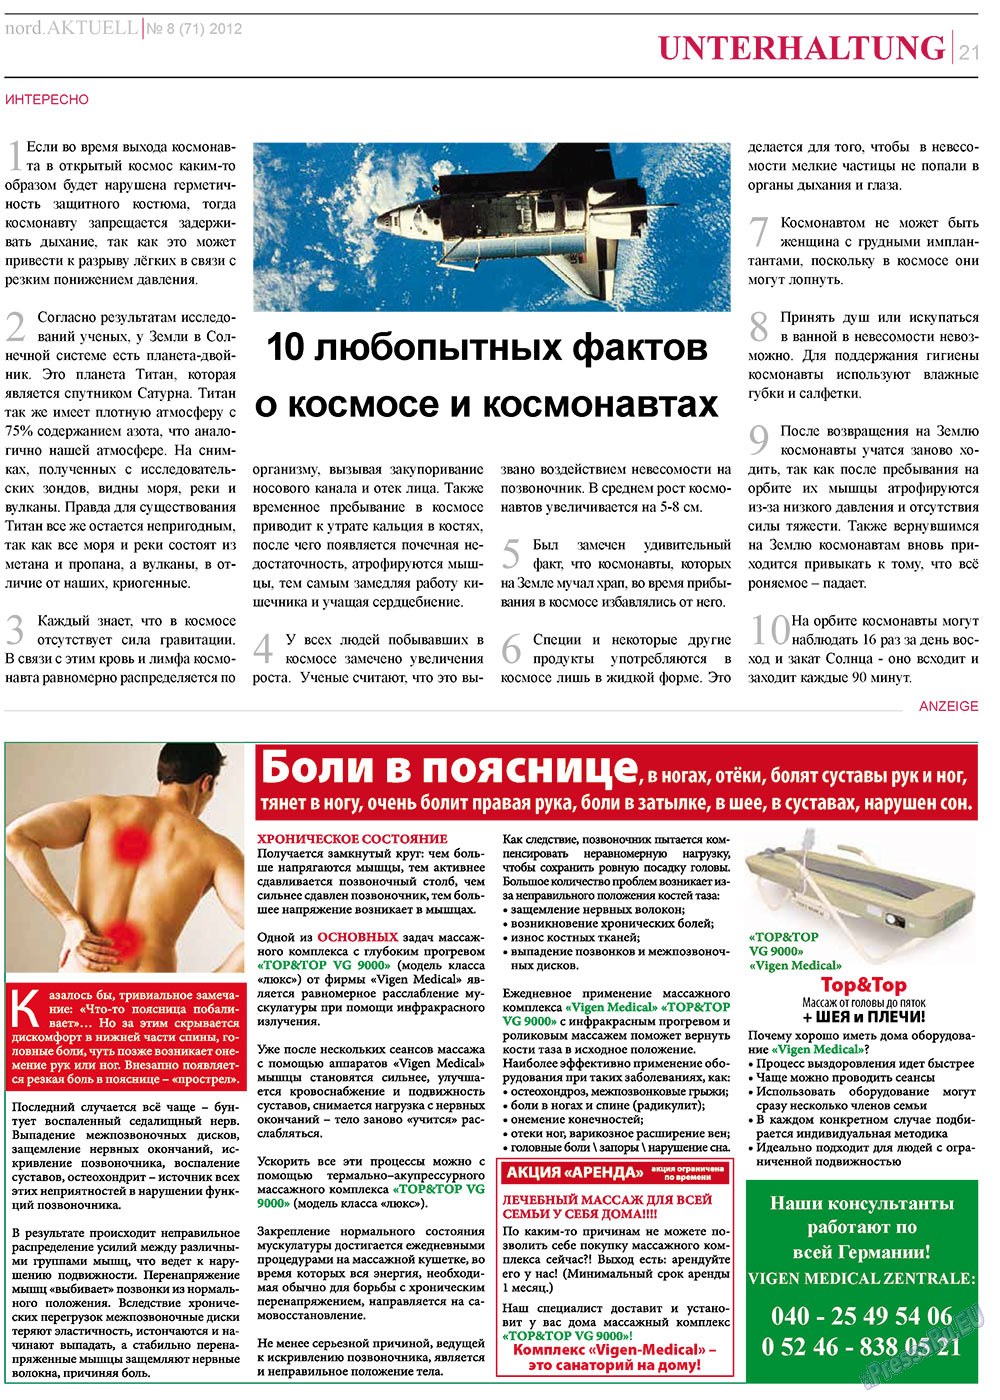 nord.Aktuell, газета. 2012 №8 стр.21